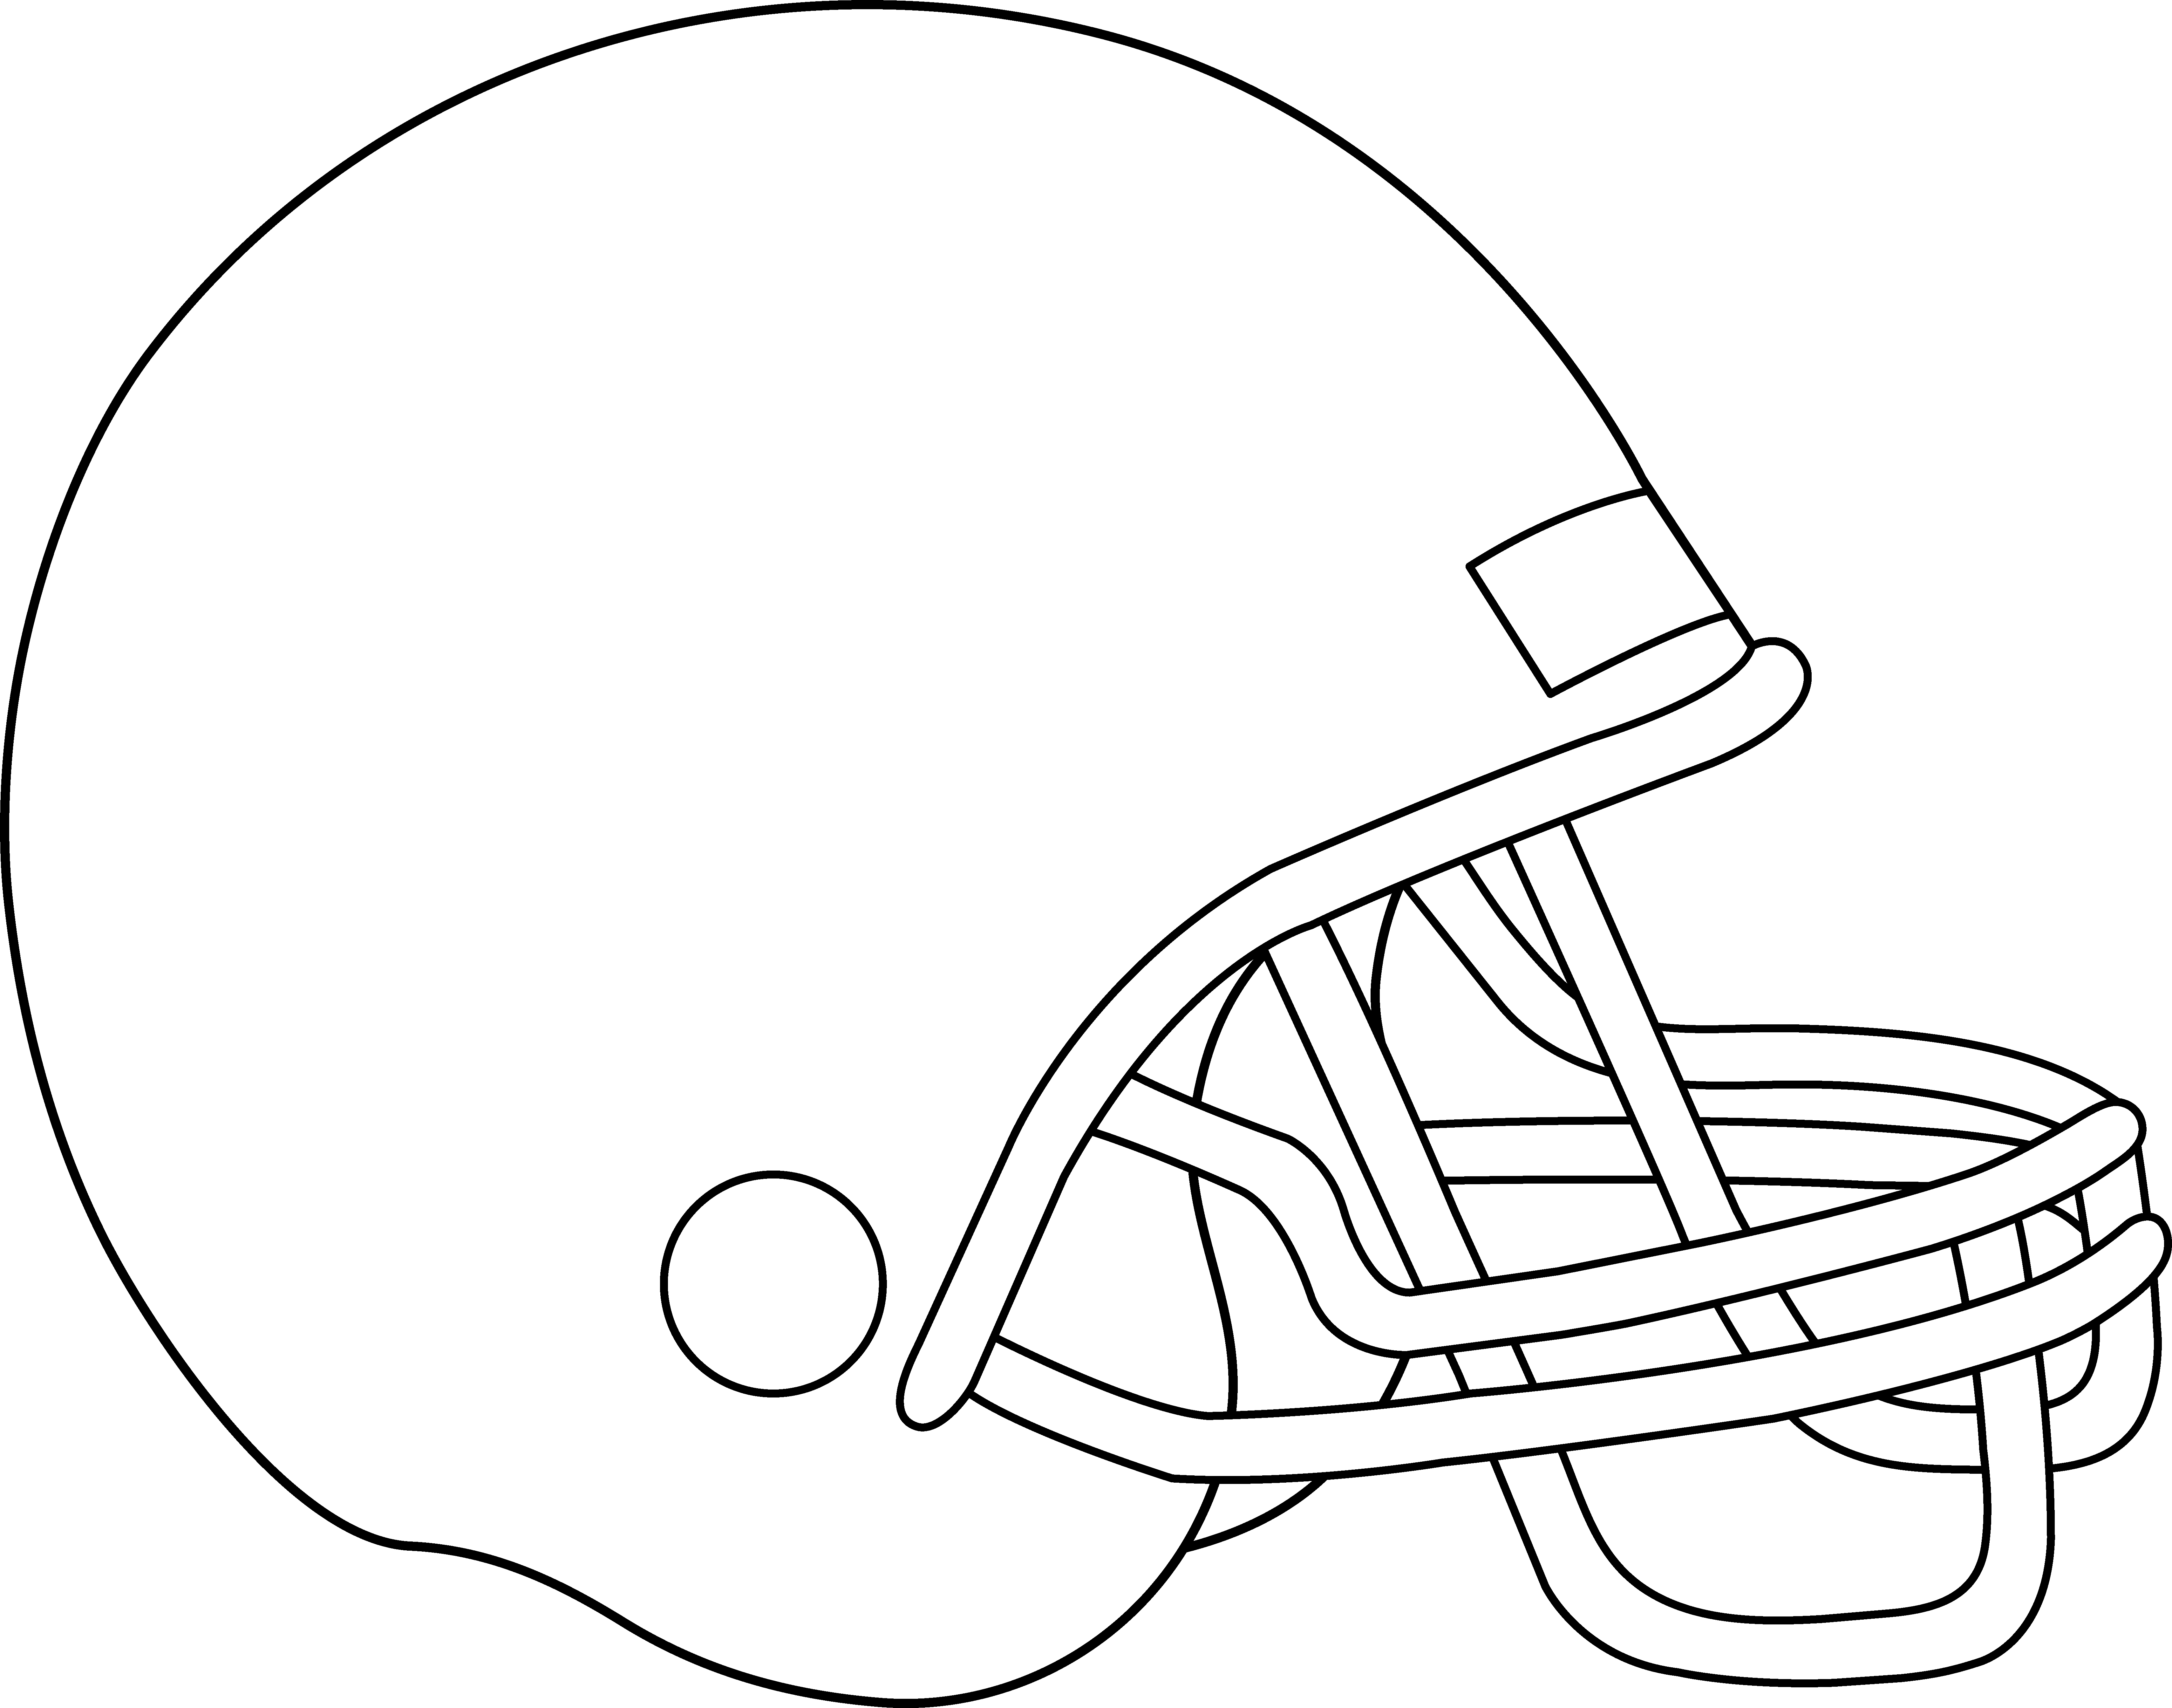 Blank Football Helmet For Coloring.